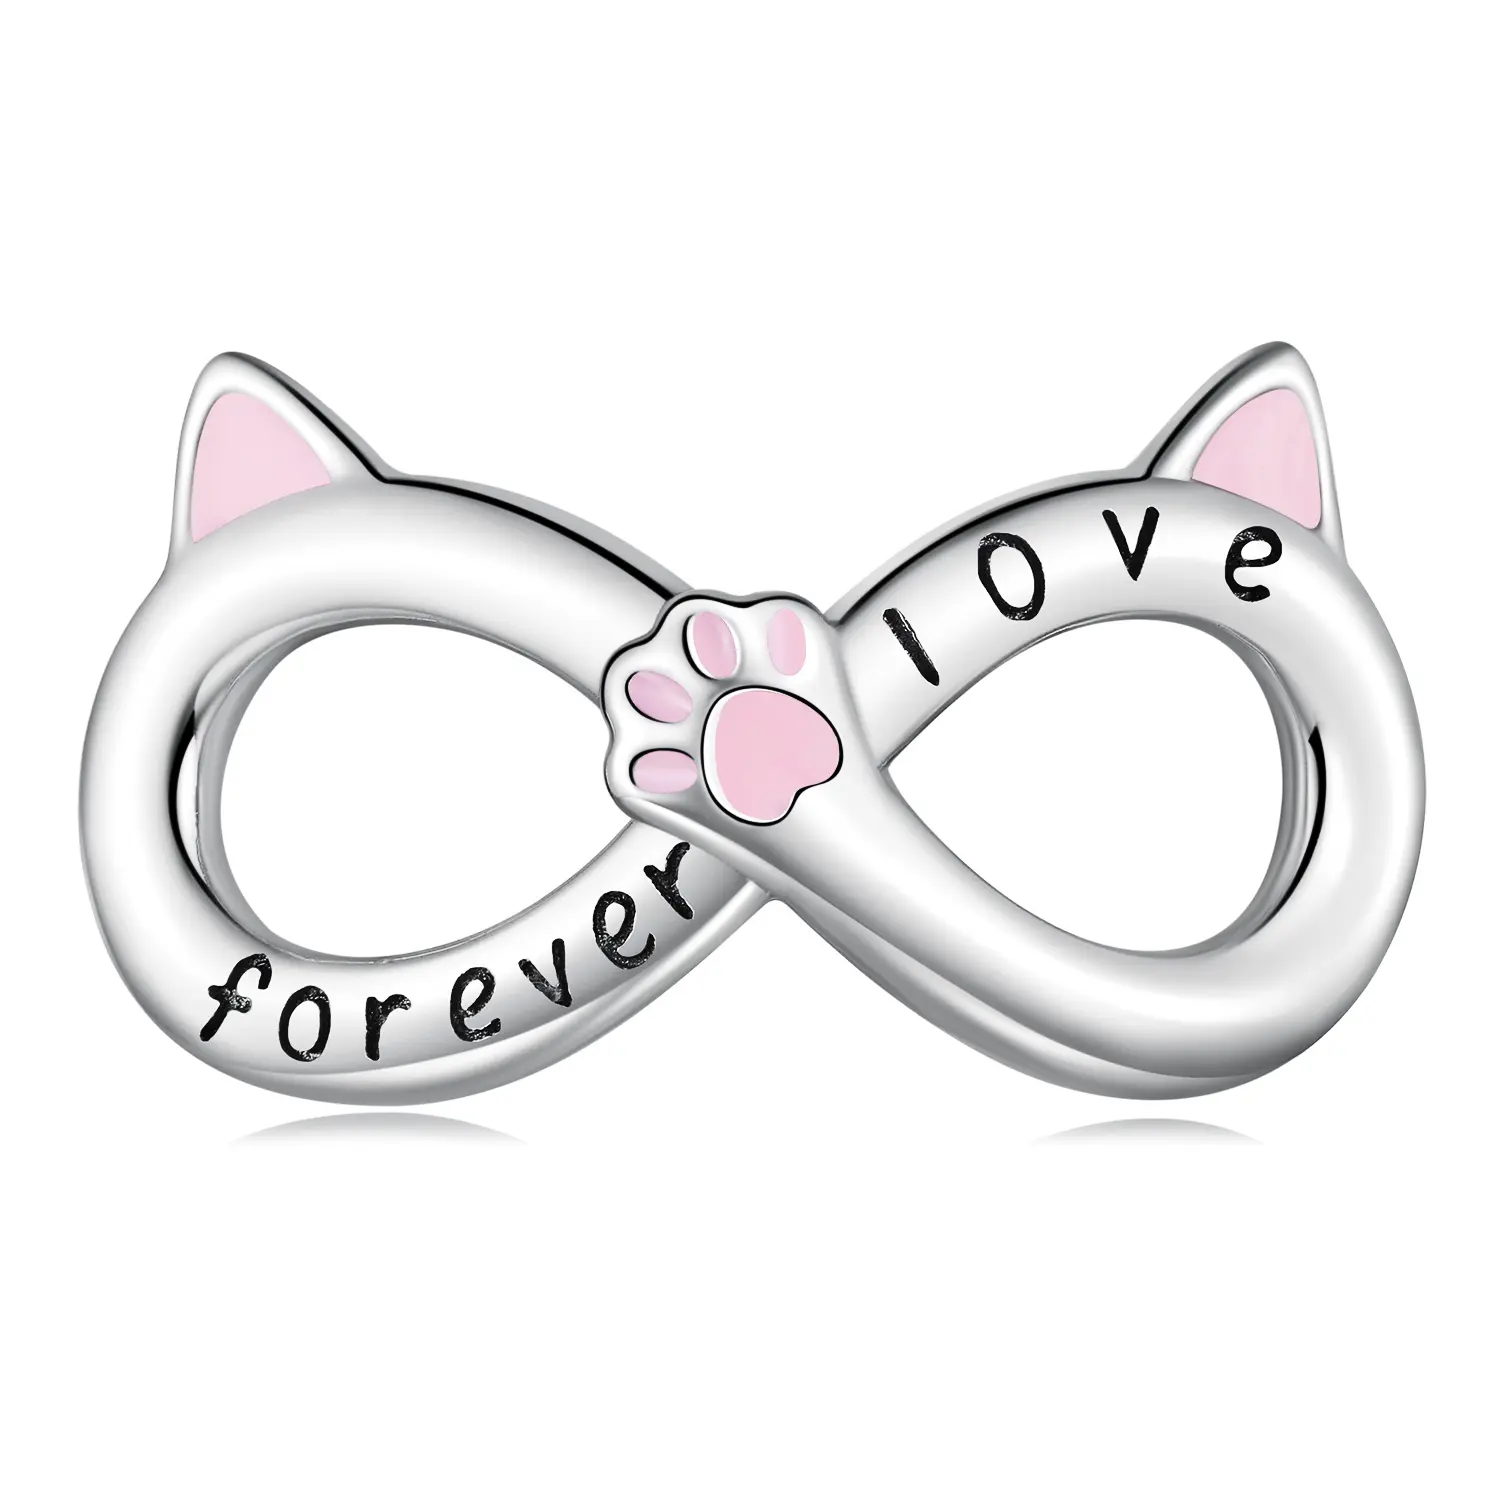 New infinite cat diy bracelet beaded pink girl heart s925 silver string accessories BSC748